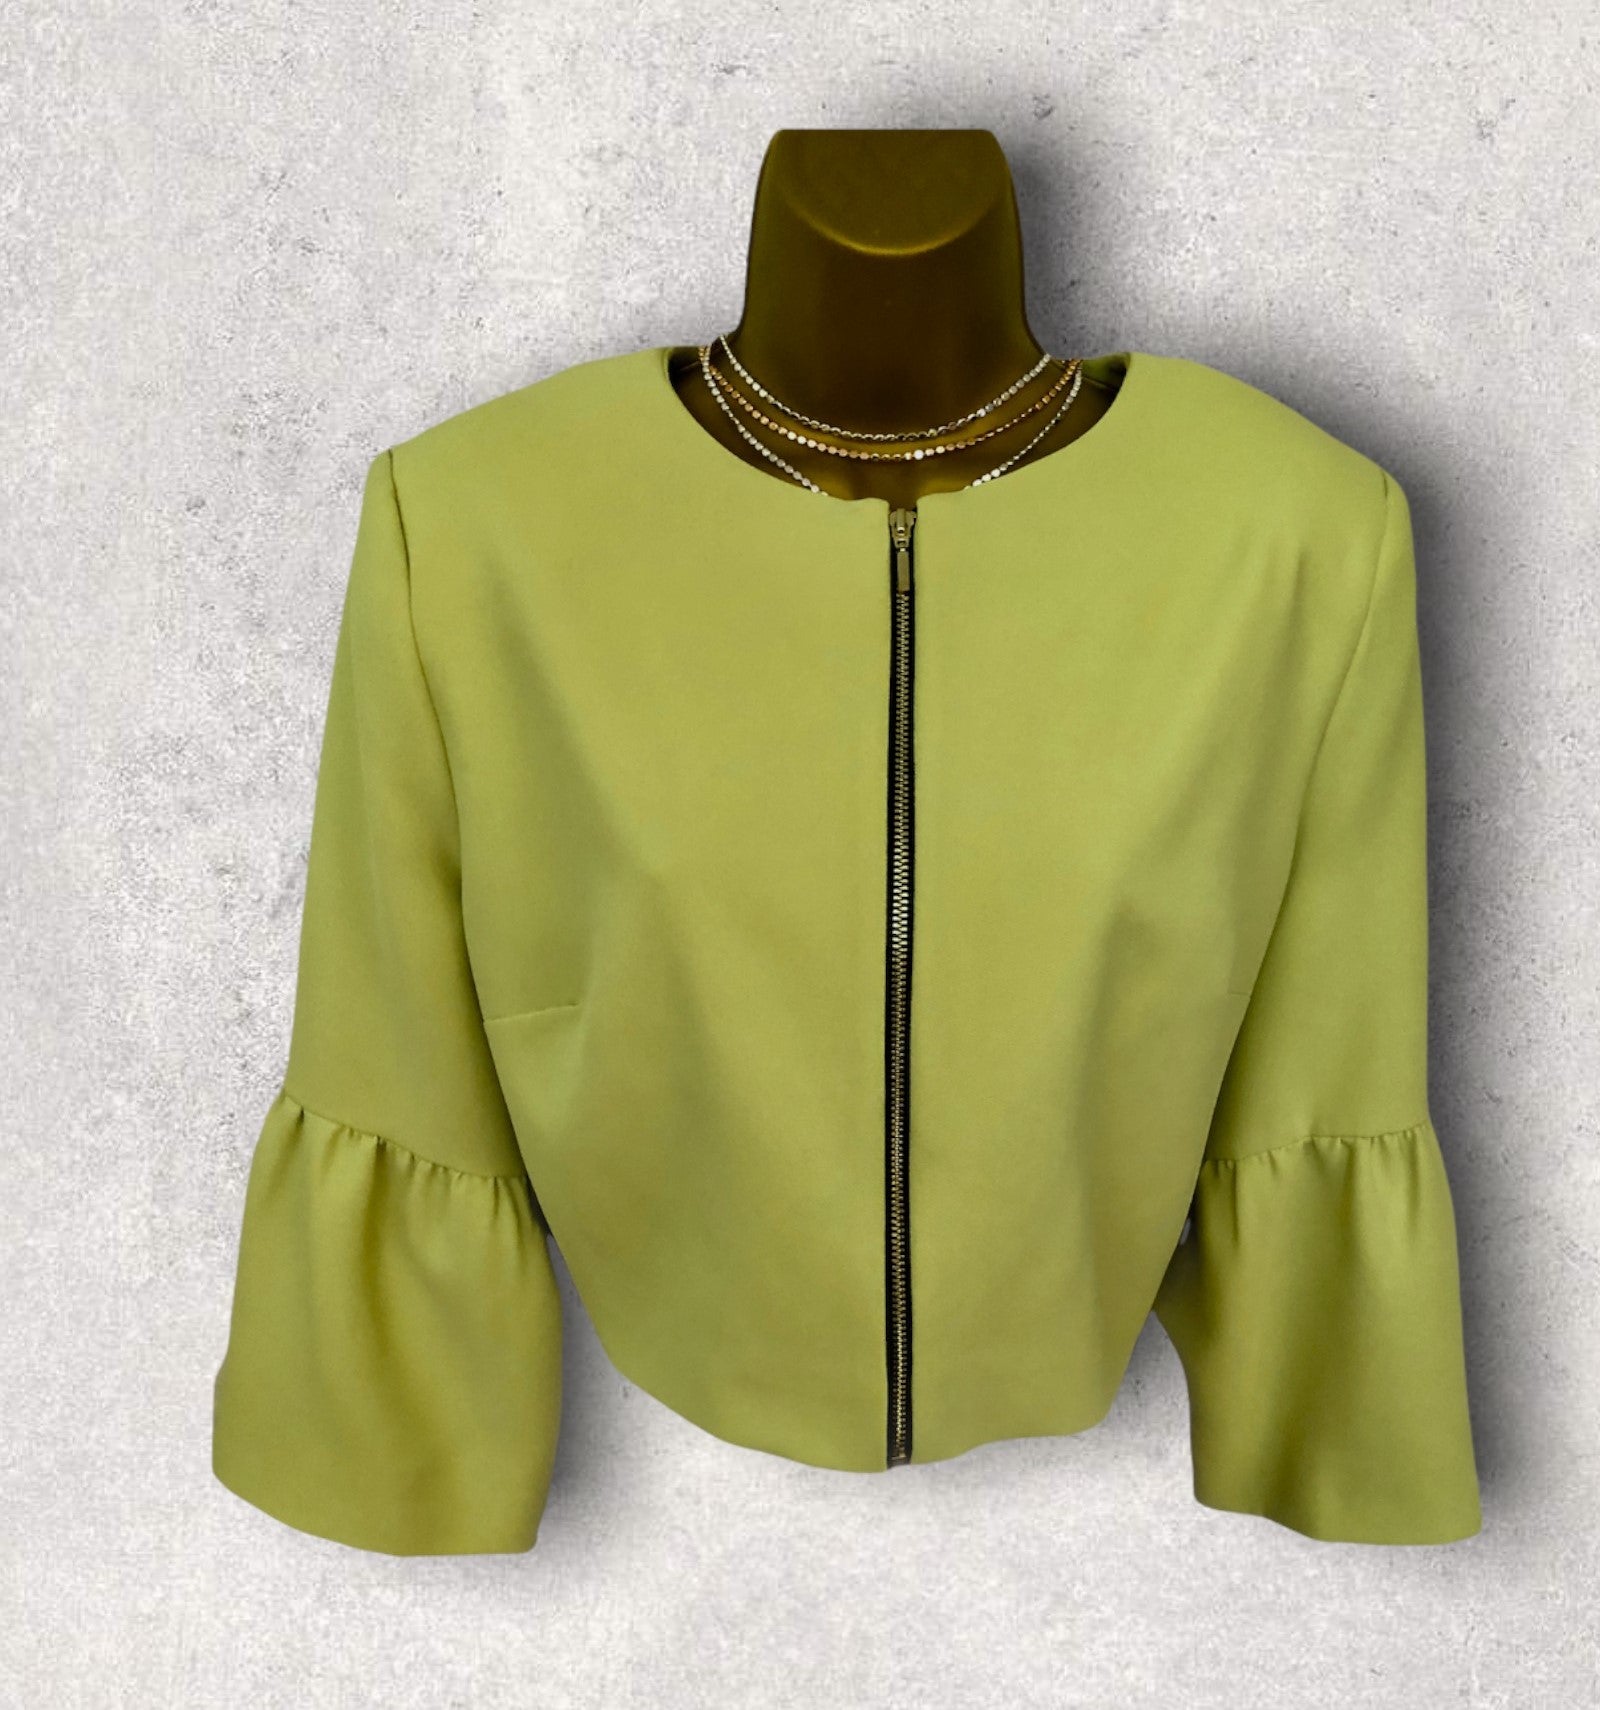 Michaela Louisa Lime Green Zip Short Jacket UK 16 US 12 EU 44 BNWT RRP £140.00 Timeless Fashions